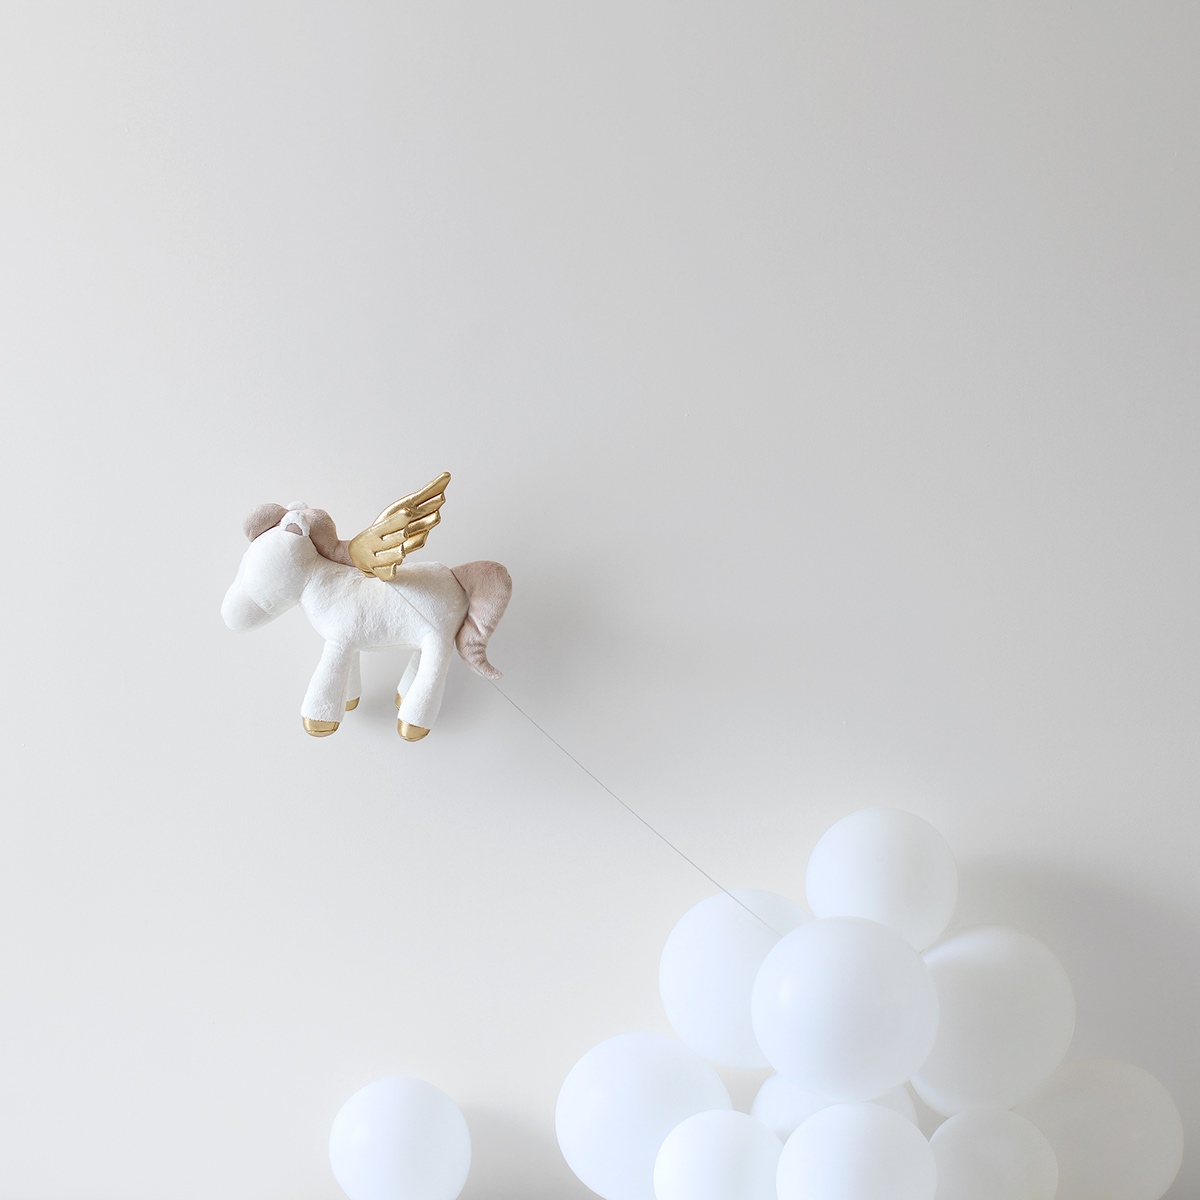 plush toy kids childrens parenting teddy bear elephant pegasus horse conceptual airplane paper balloon product idea